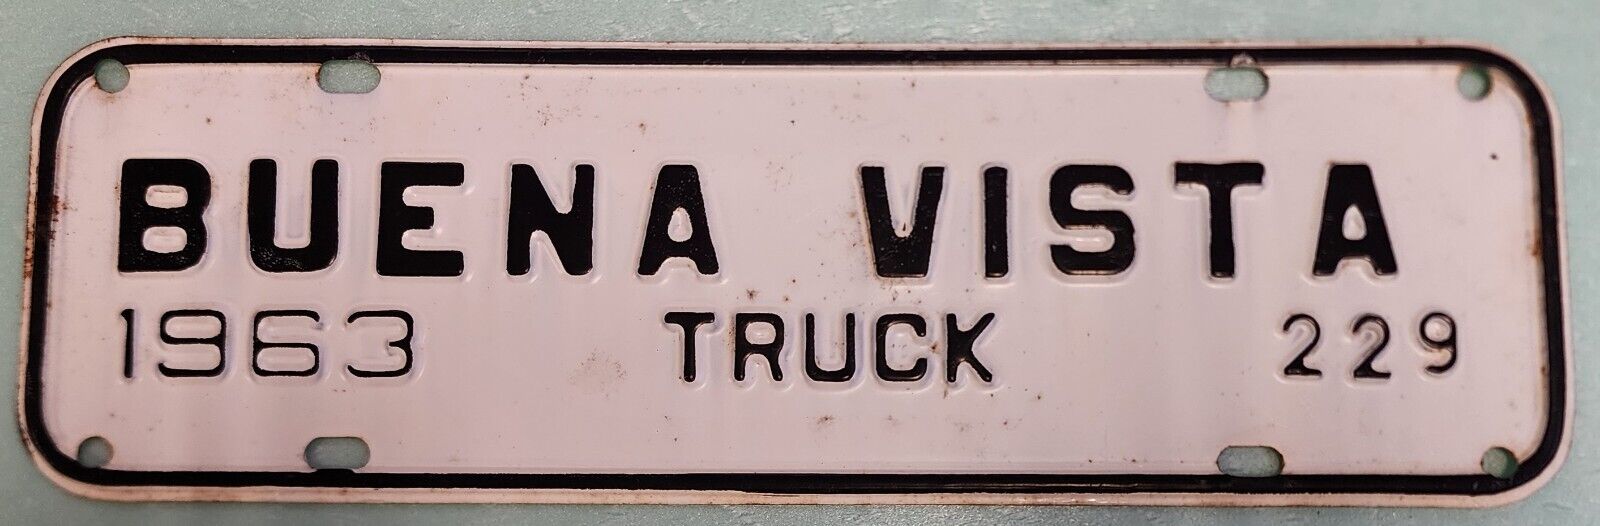 1963 Buena Vista  Truck Virginia License Plate Town Tax Tag City #229